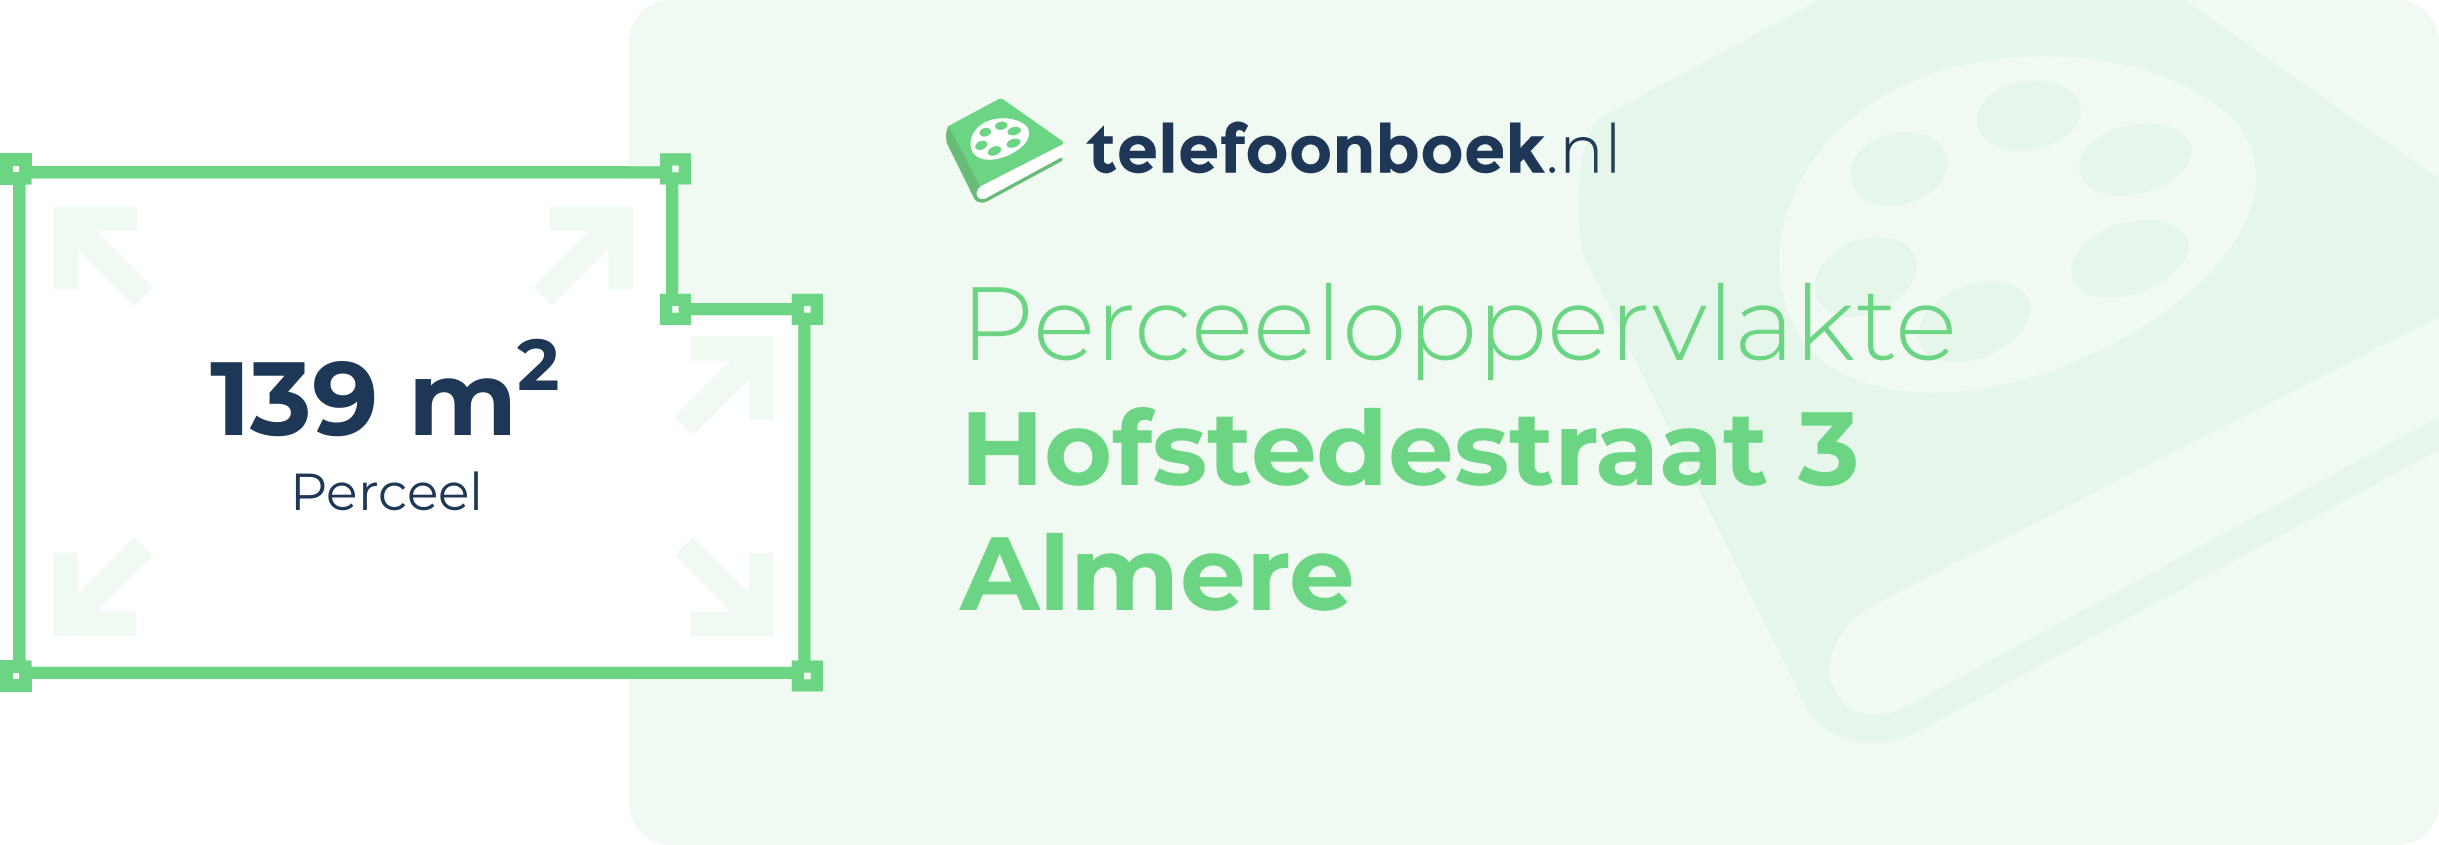 Perceeloppervlakte Hofstedestraat 3 Almere